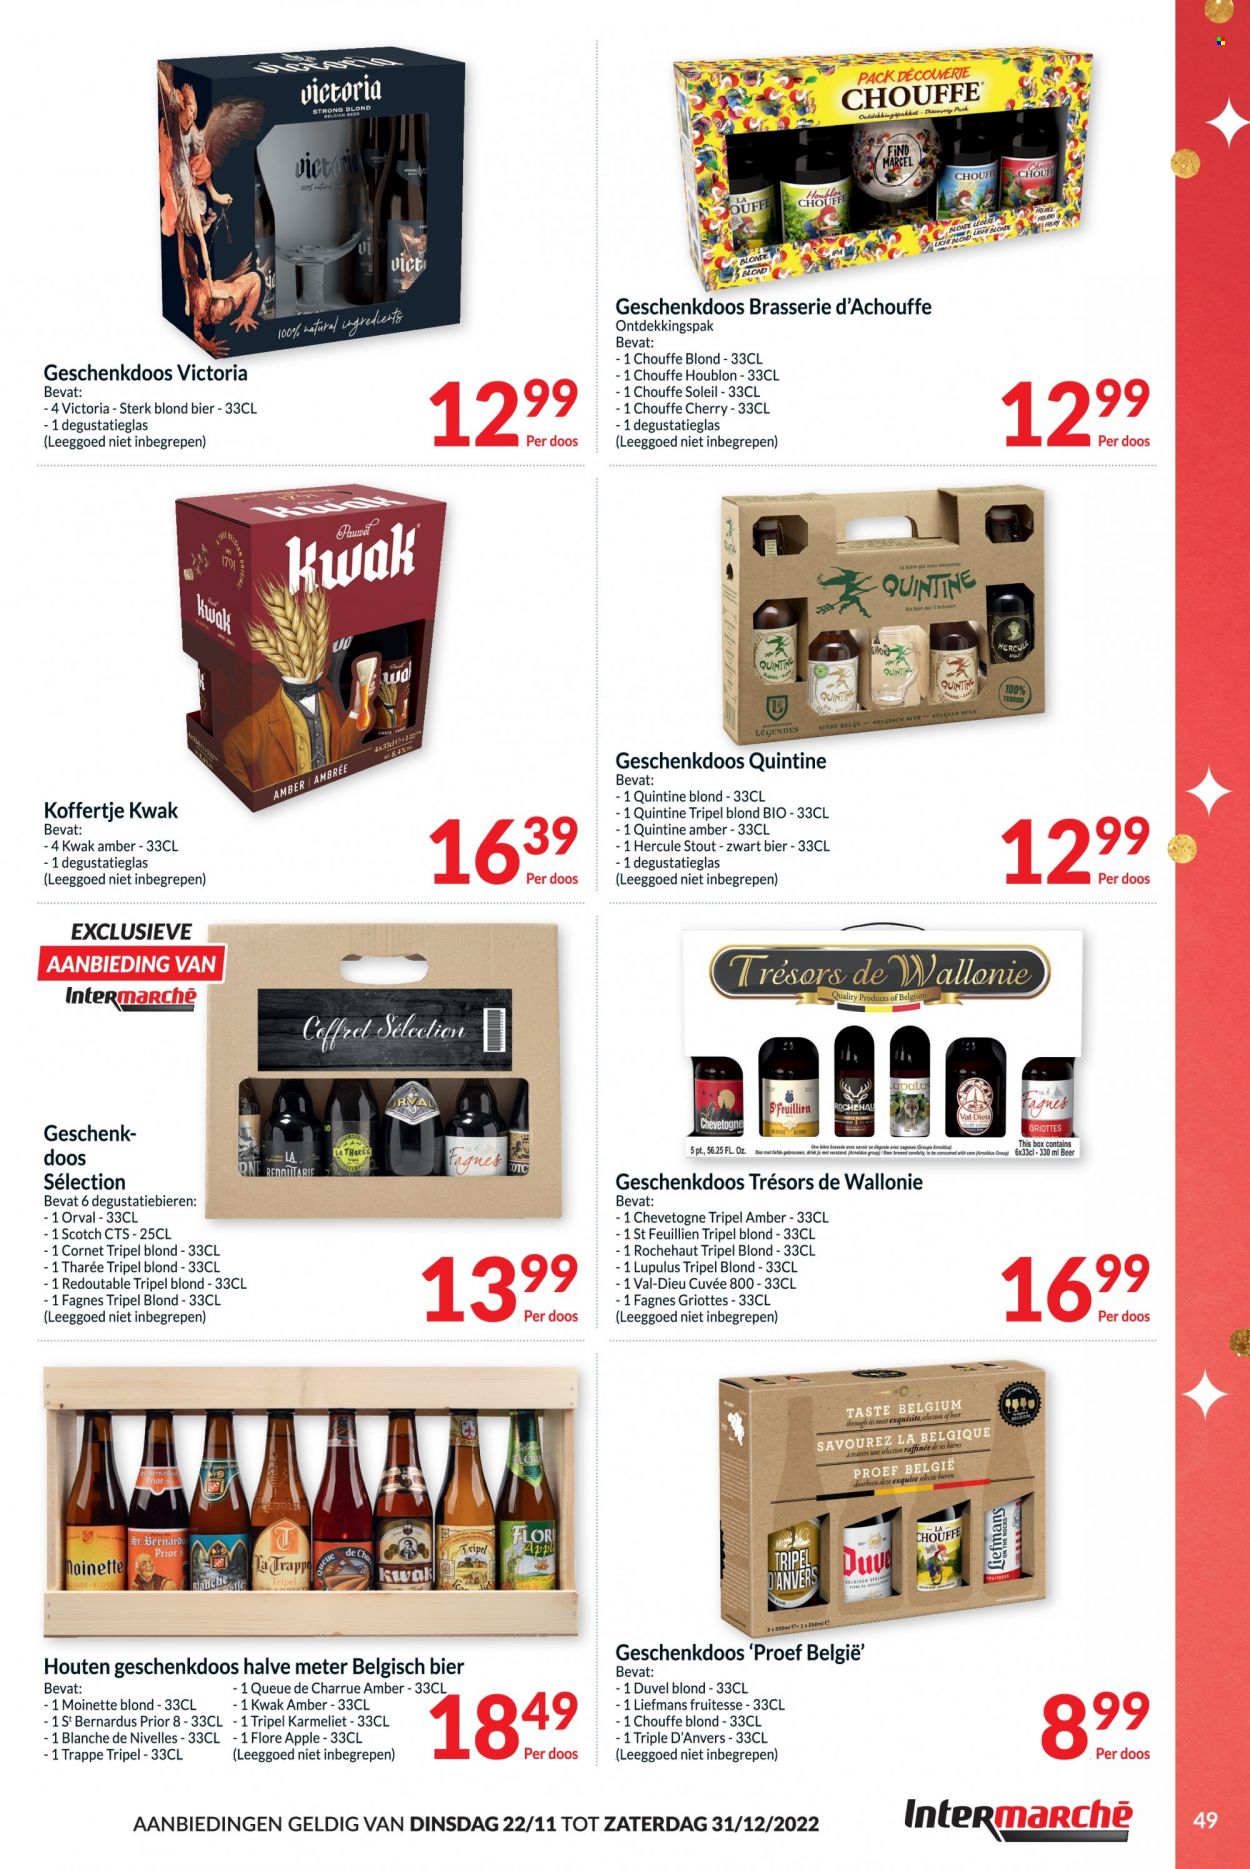 thumbnail - Intermarché-aanbieding - 22/11/2022 - 31/12/2022 -  producten in de aanbieding - Duvel, bier, Liefmans. Pagina 49.